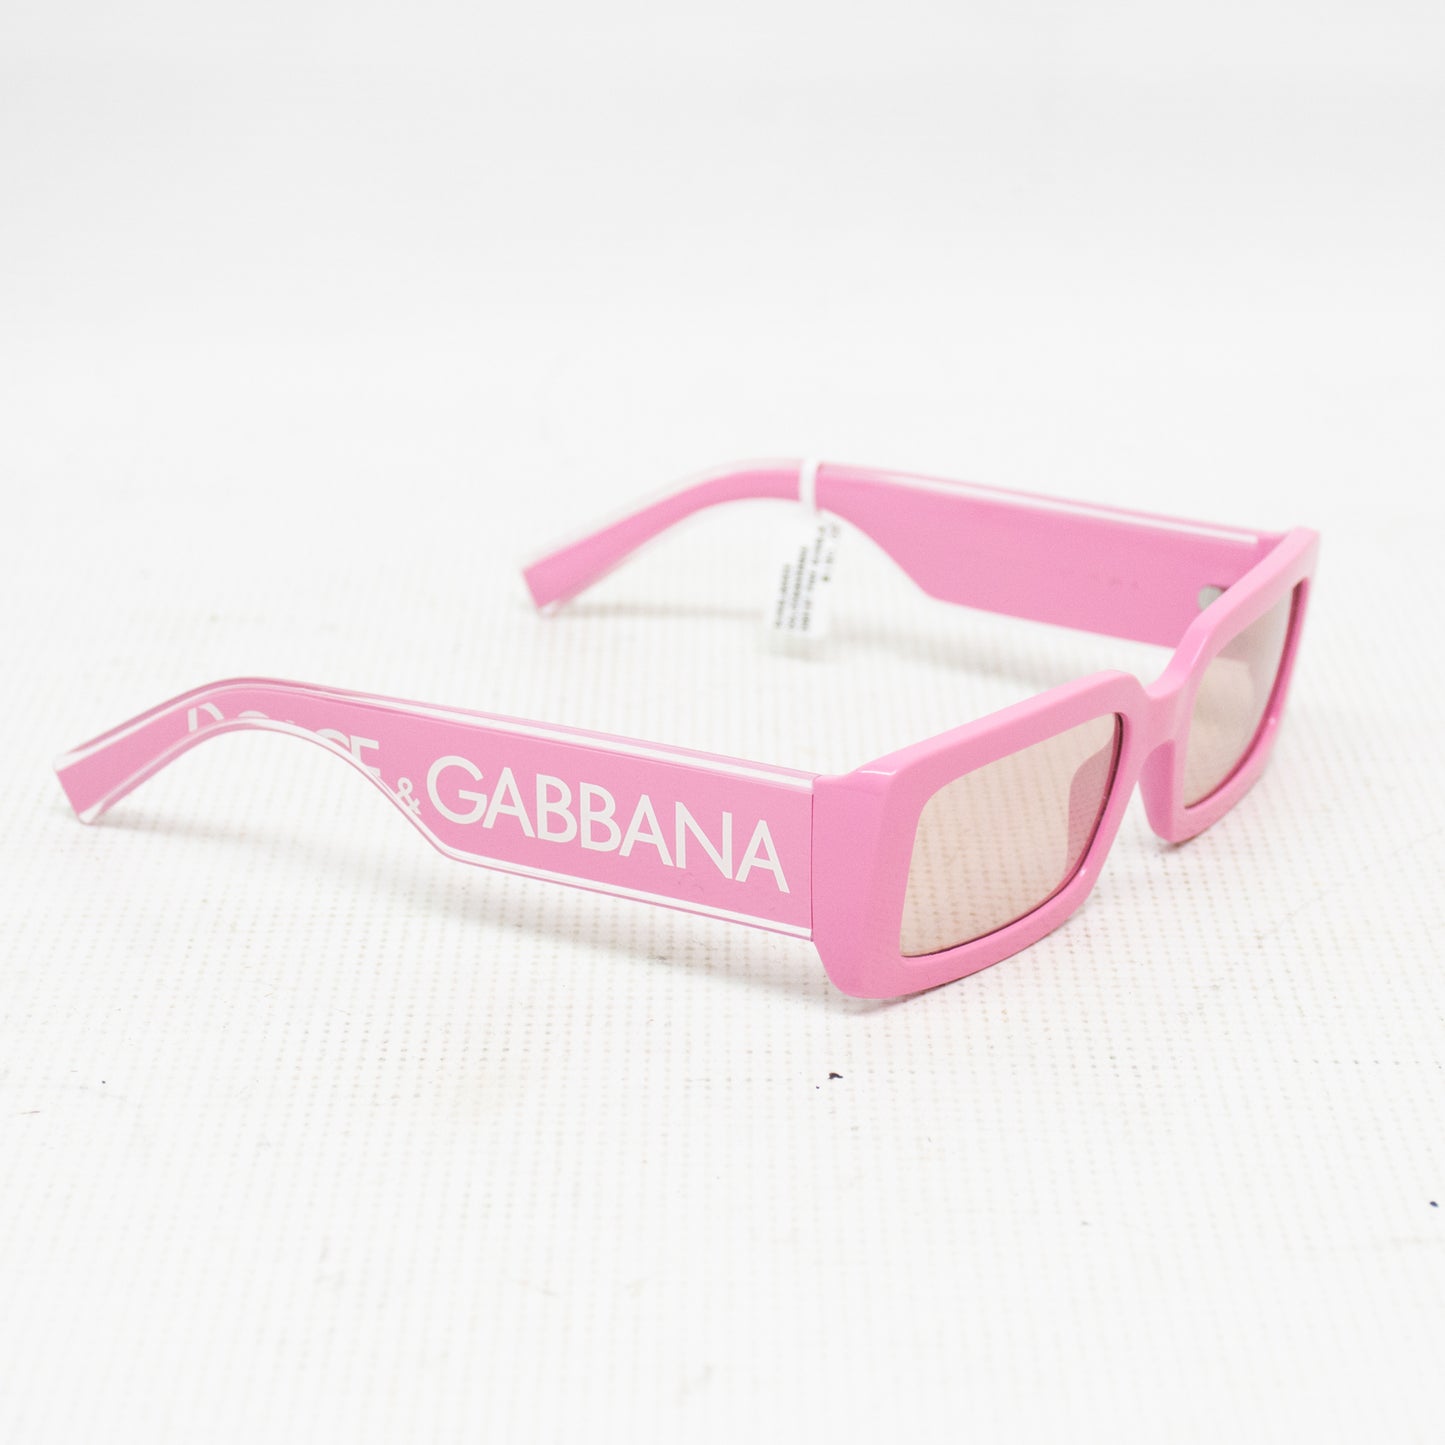 Dolce & Gabanna DG6187 Pink Sunglasses